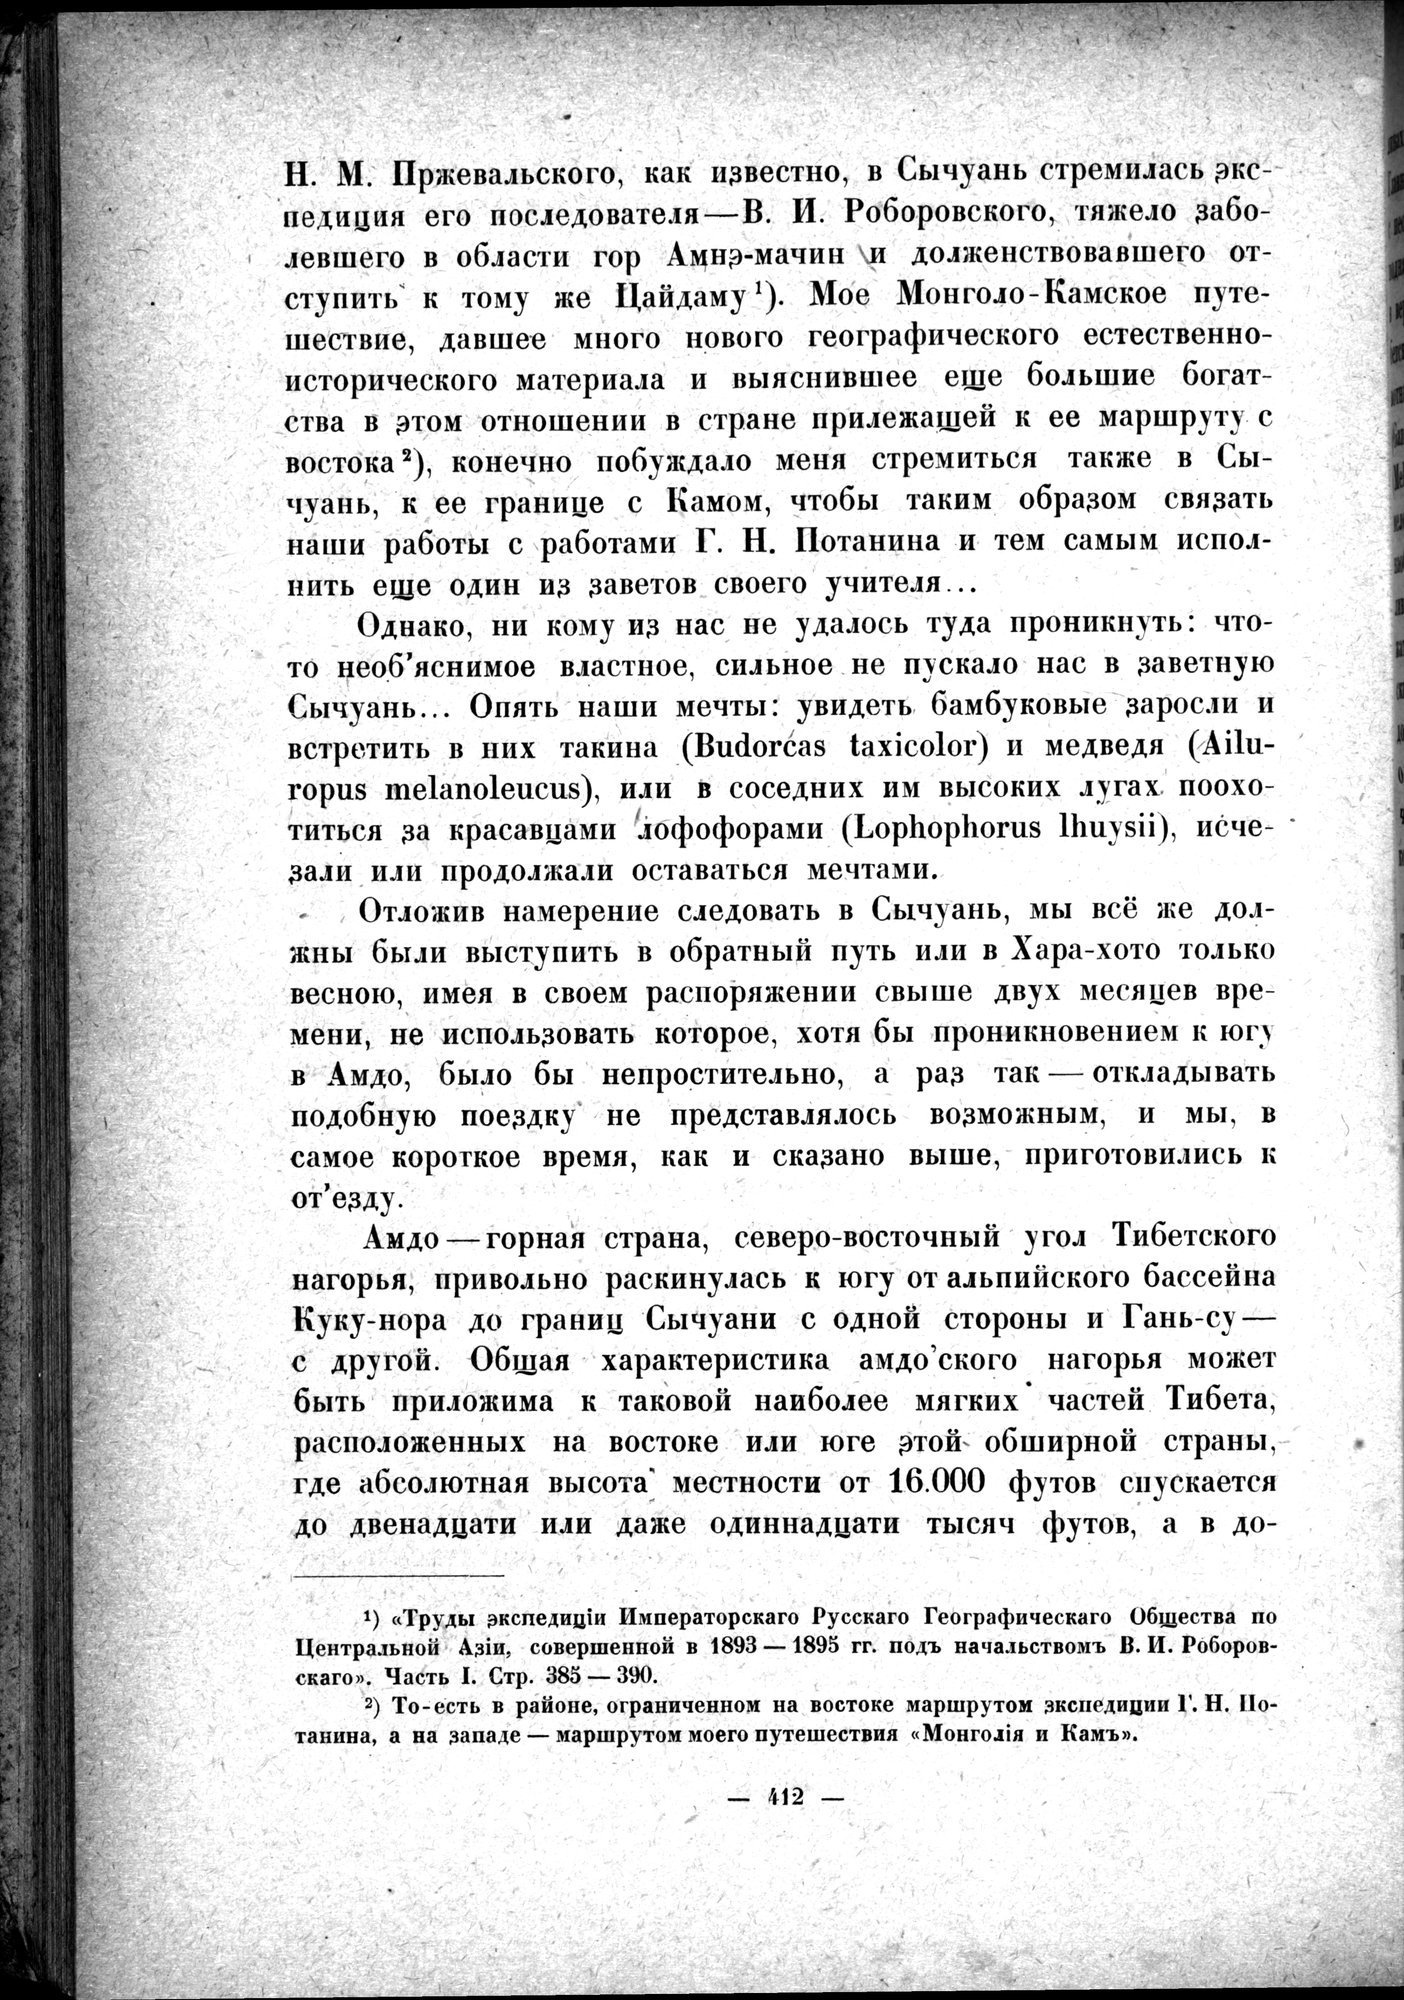 Mongoliya i Amdo i mertby gorod Khara-Khoto : vol.1 / Page 474 (Grayscale High Resolution Image)